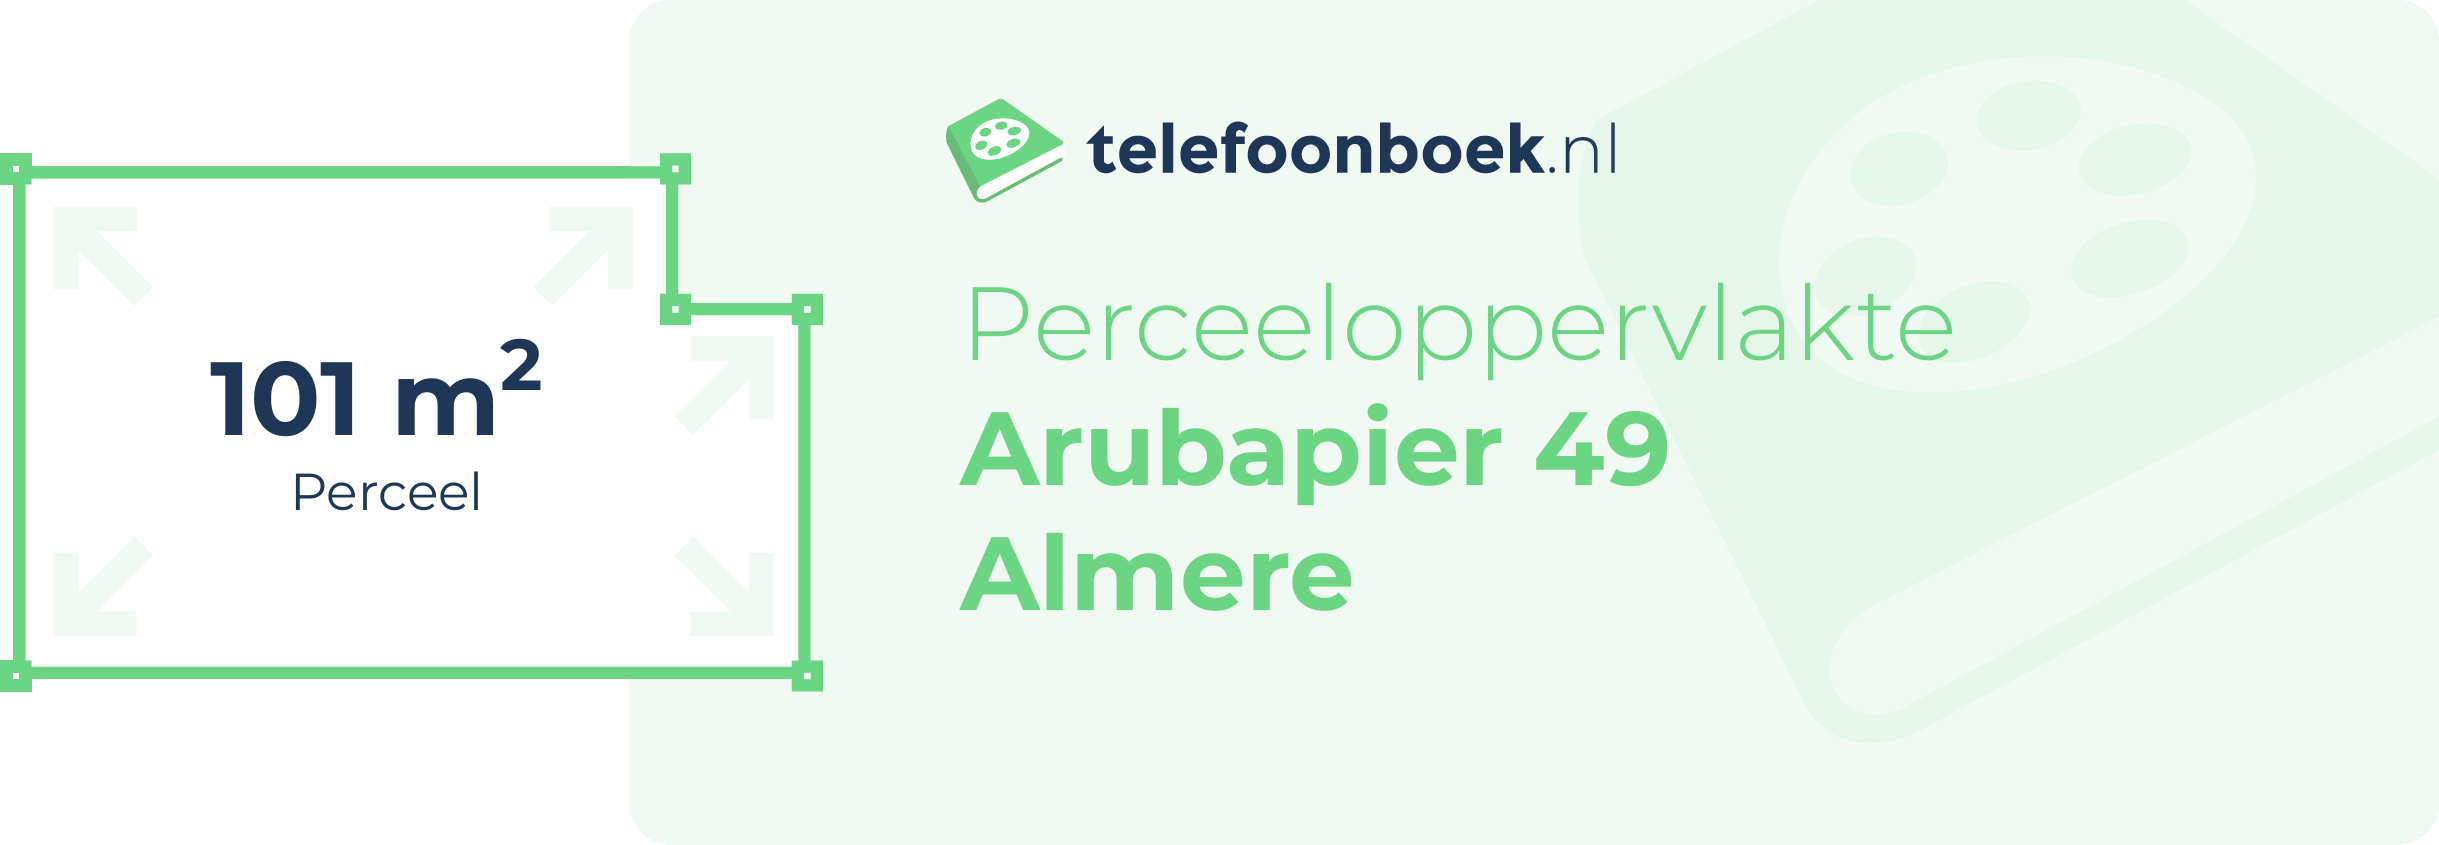 Perceeloppervlakte Arubapier 49 Almere